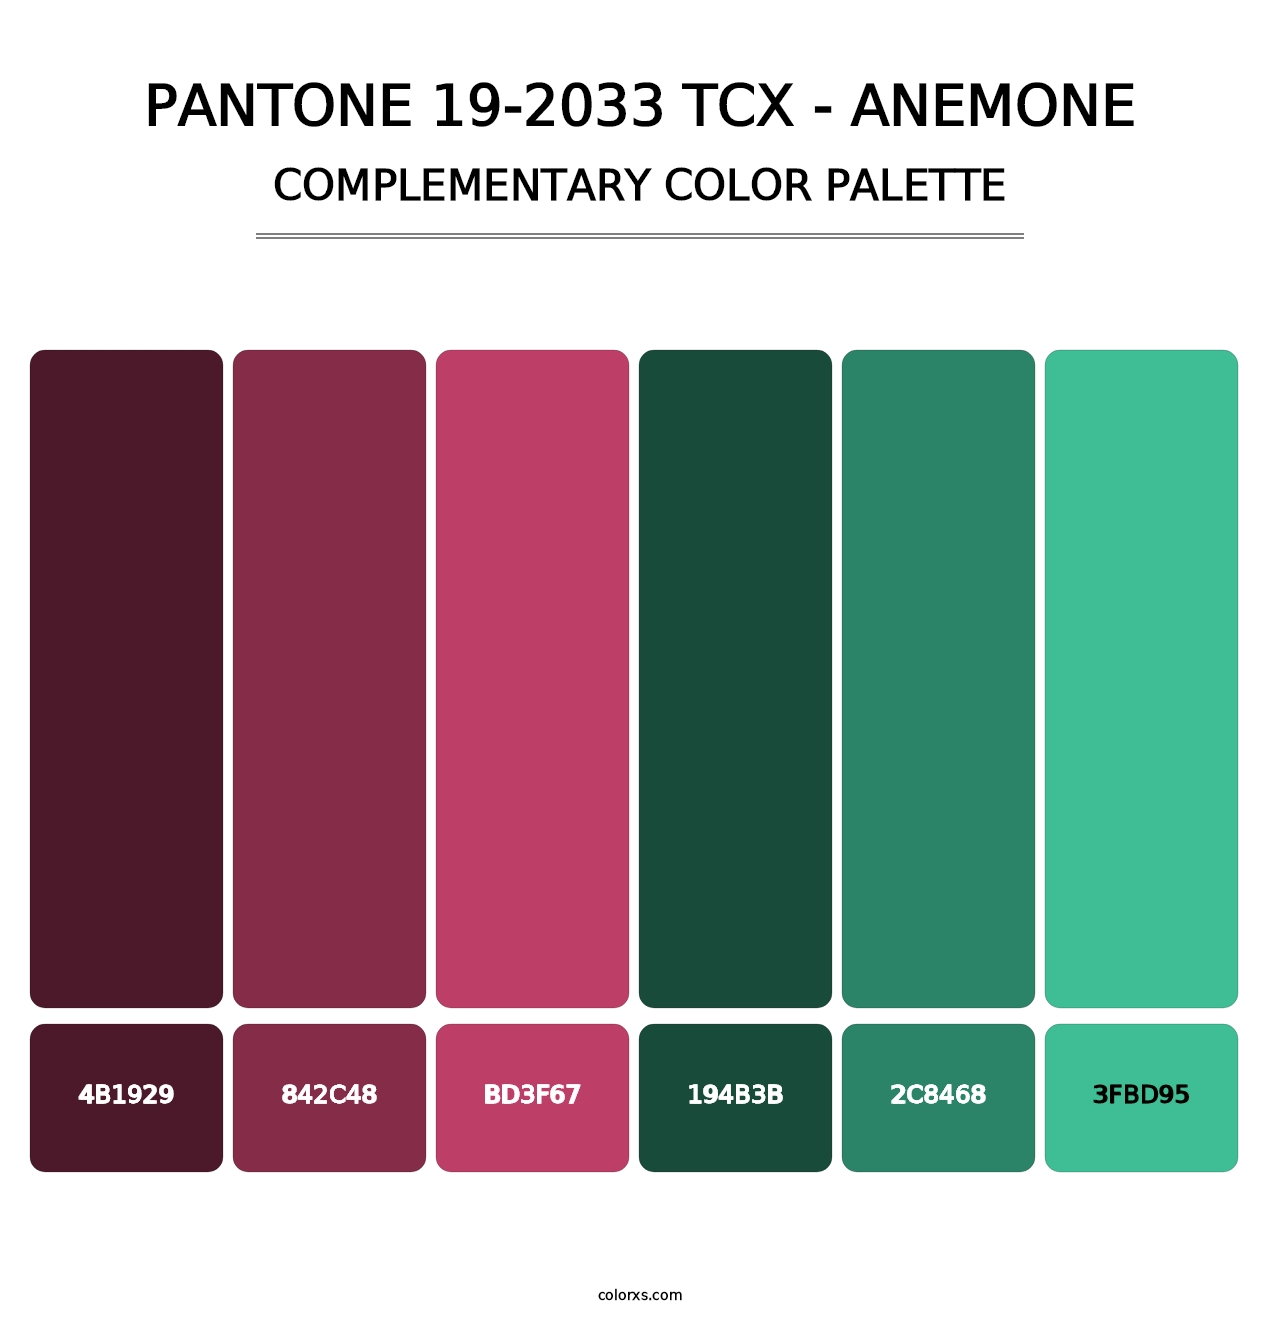 PANTONE 19-2033 TCX - Anemone - Complementary Color Palette